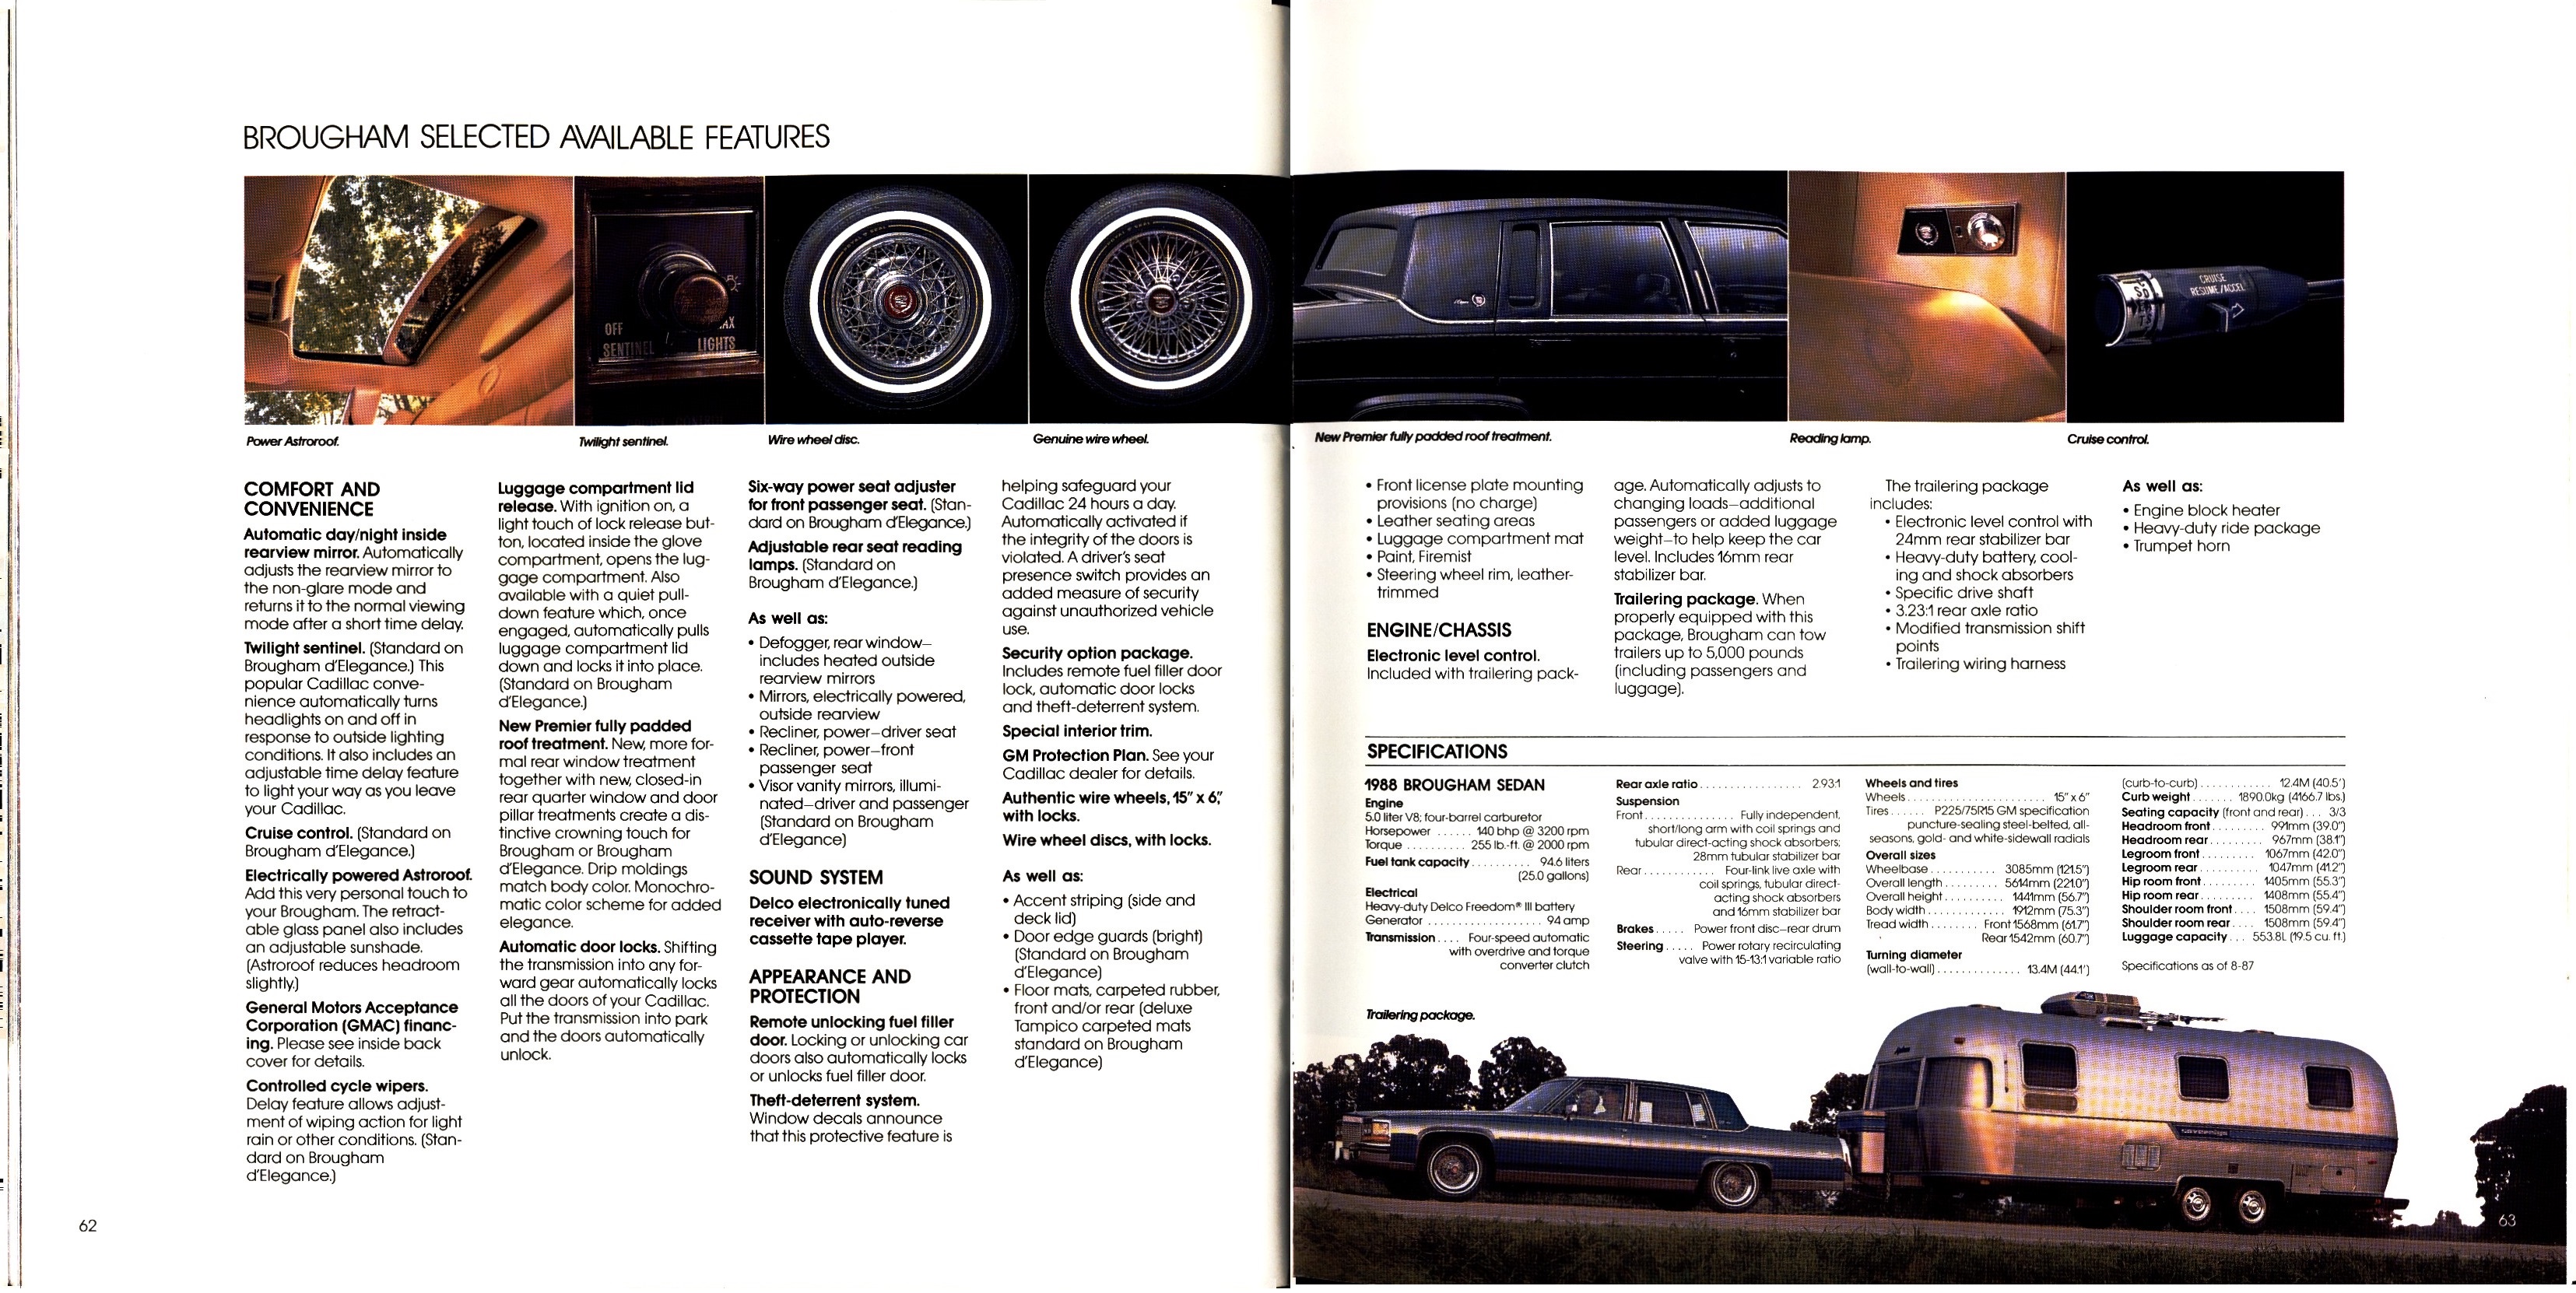 1988 Cadillac Full Line Prestige Brochure 62-63